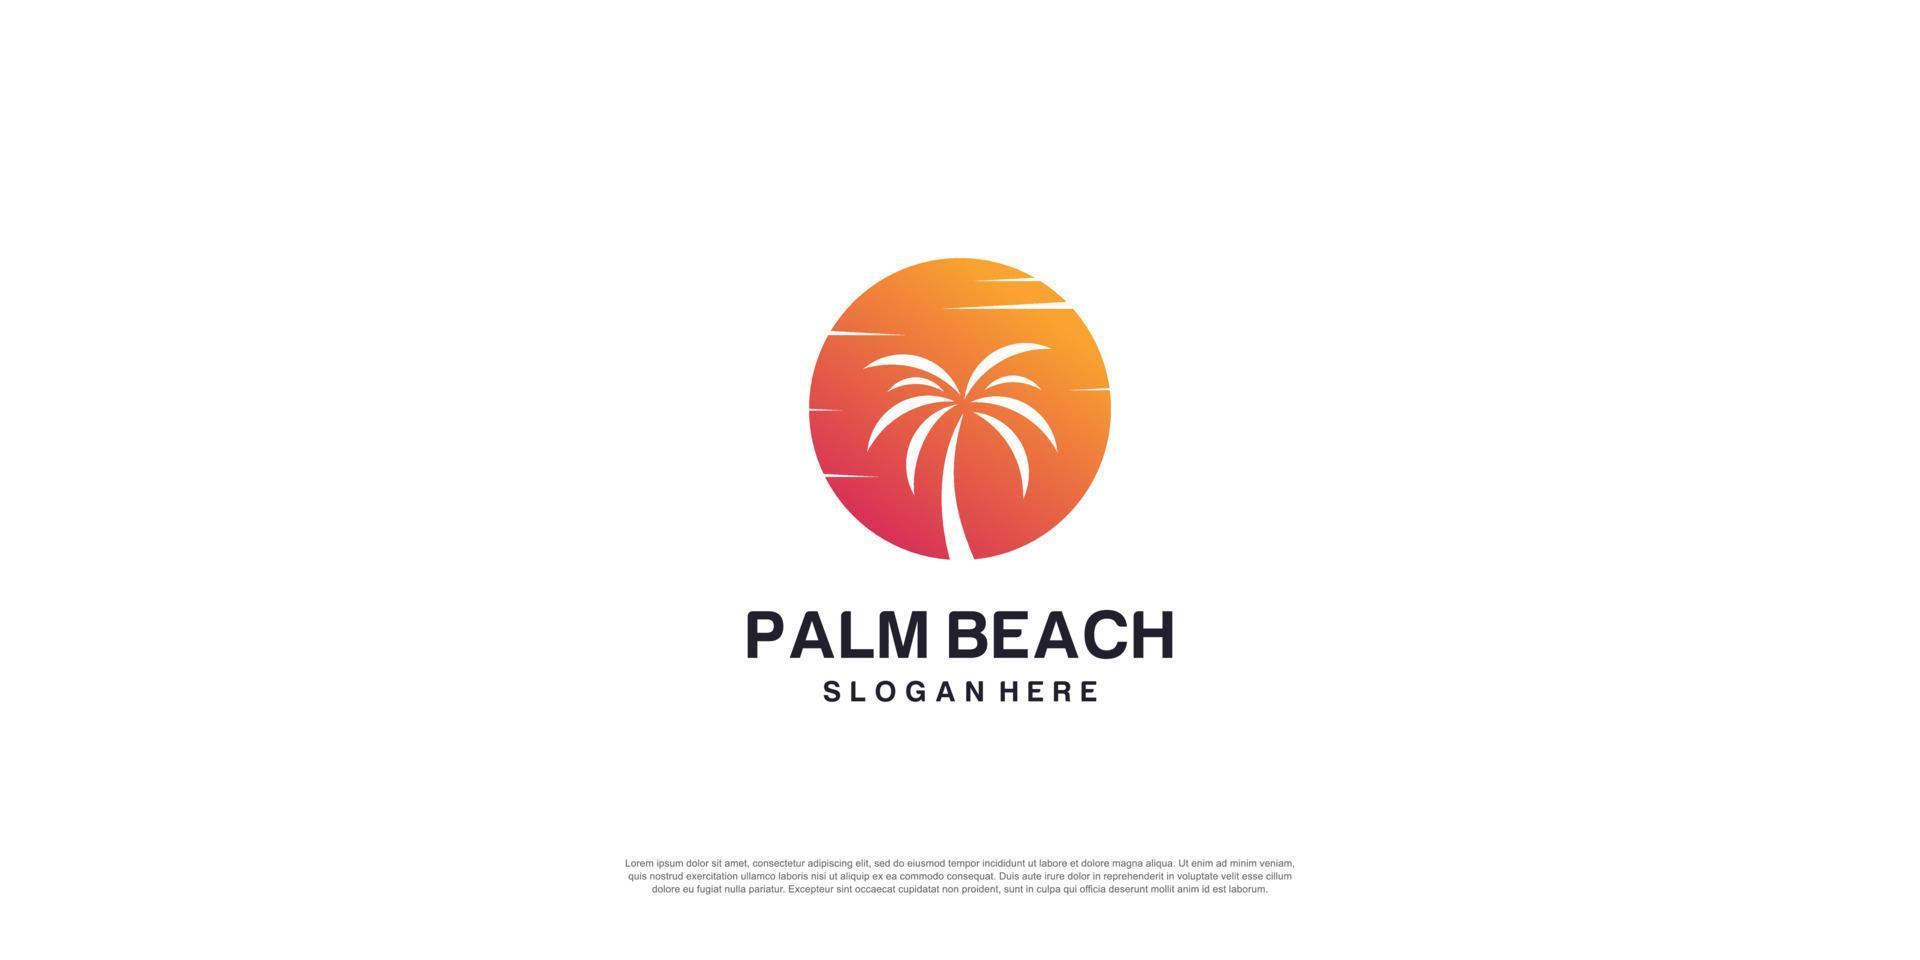 Palm beach logo with creative concept Premium Vector part 2